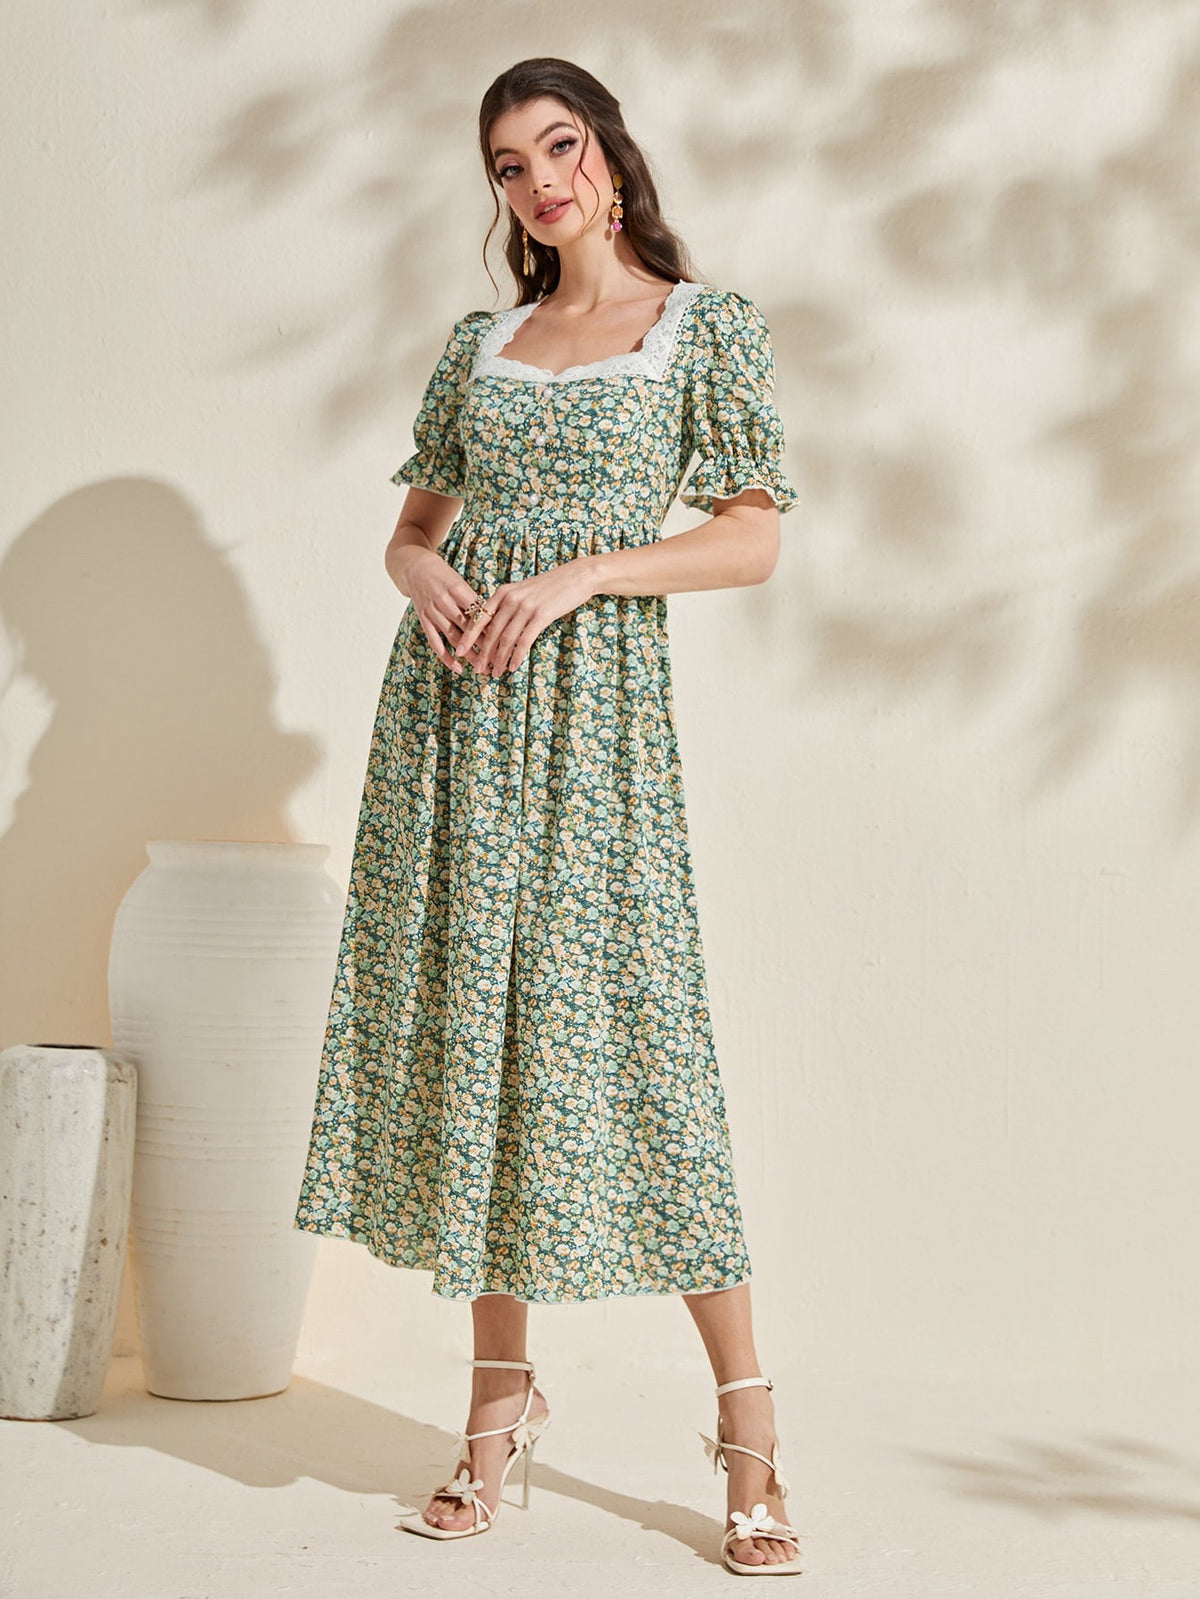 Floral Print Dress with Lace Trim